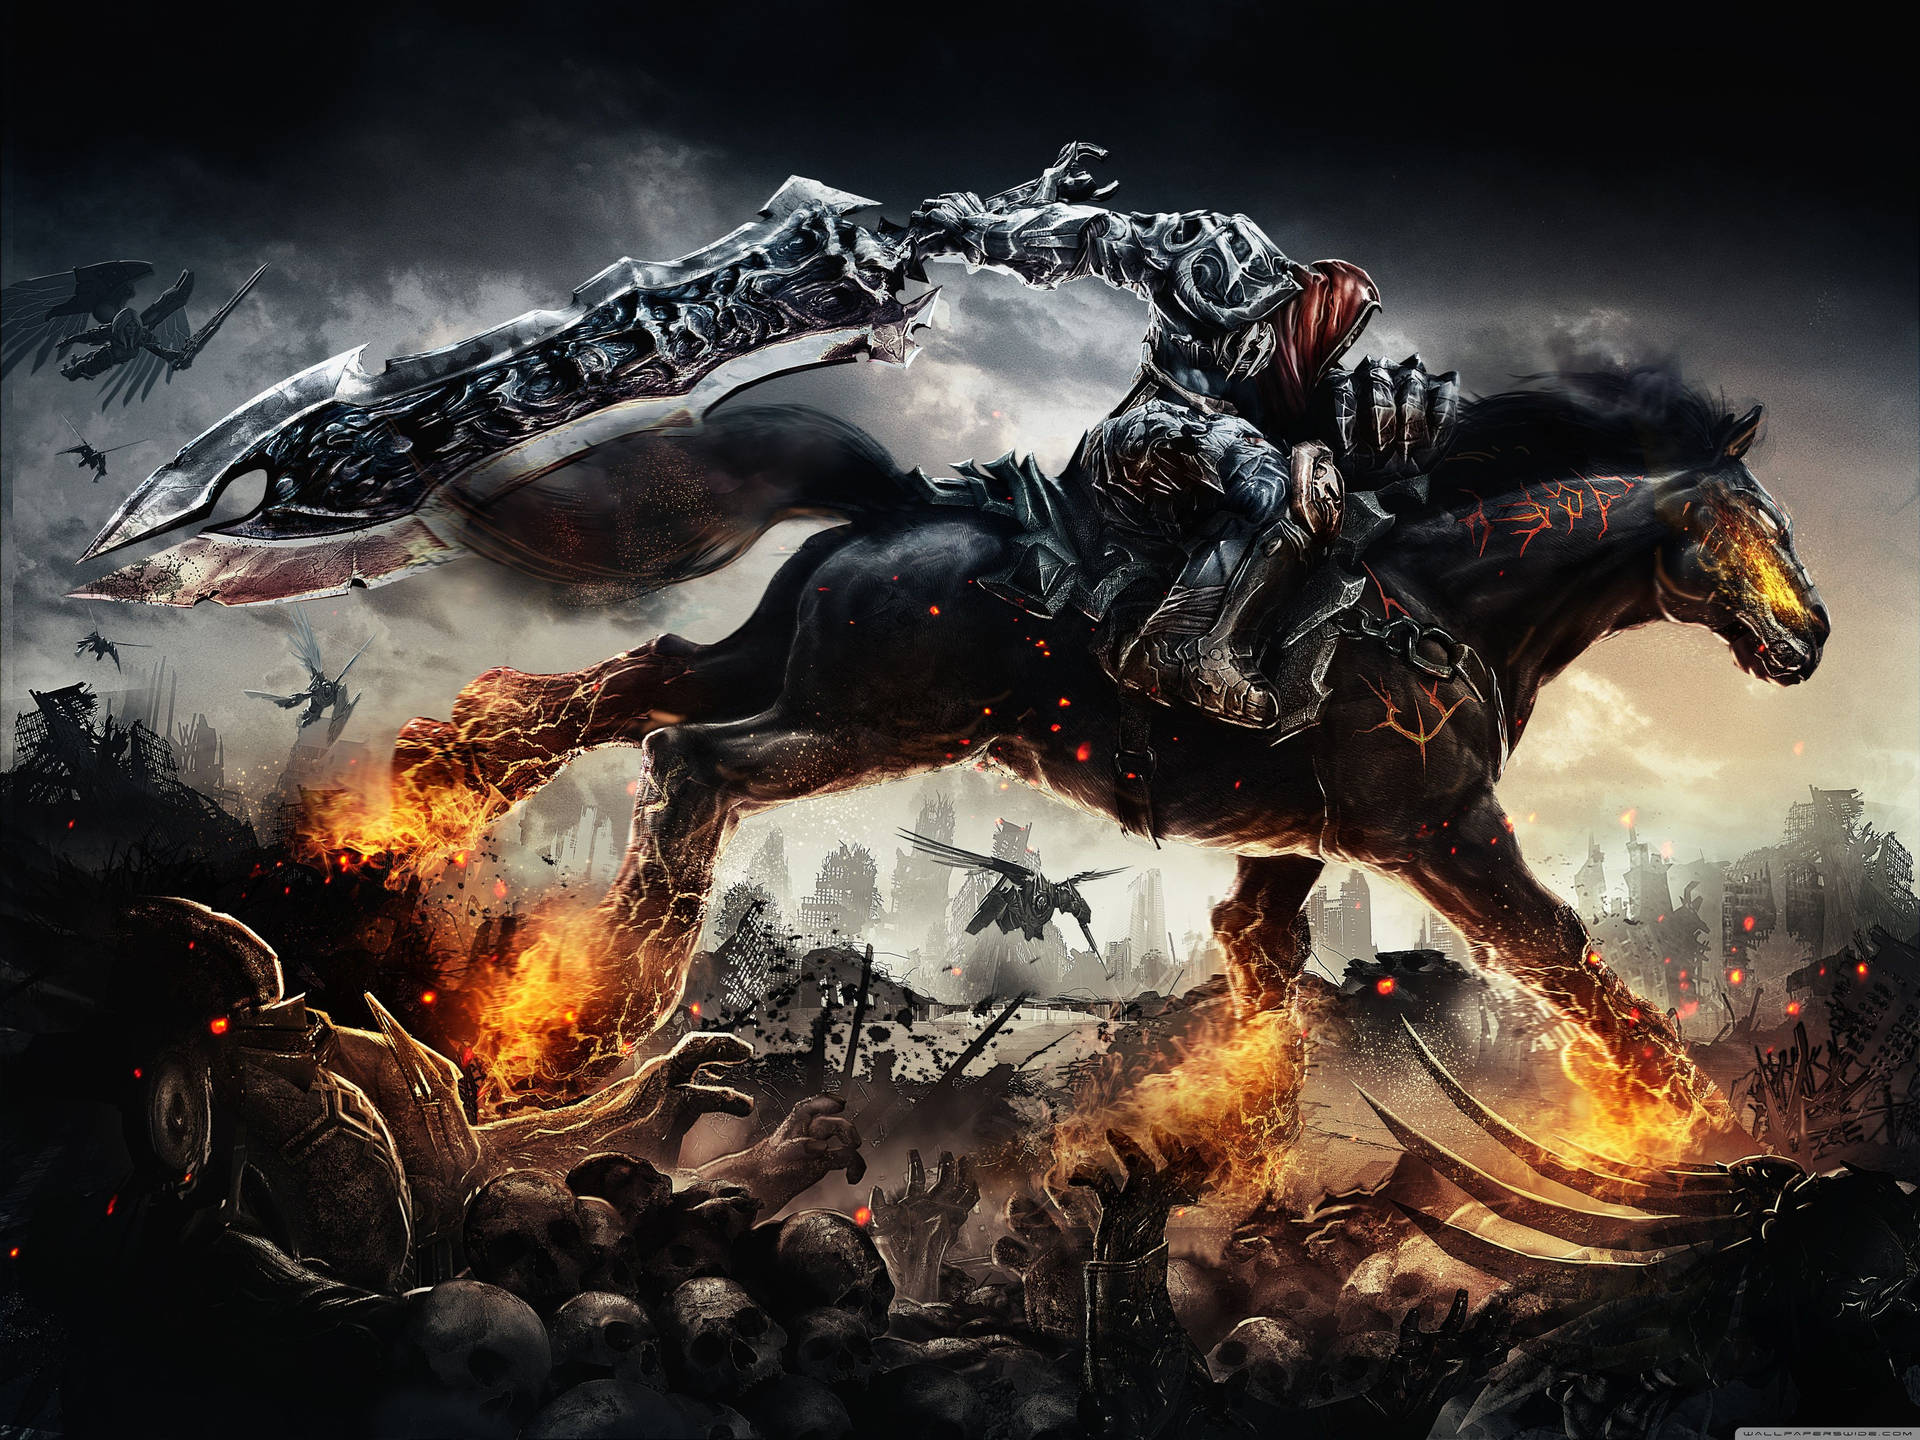 “The Horseman of War Rides into Battle